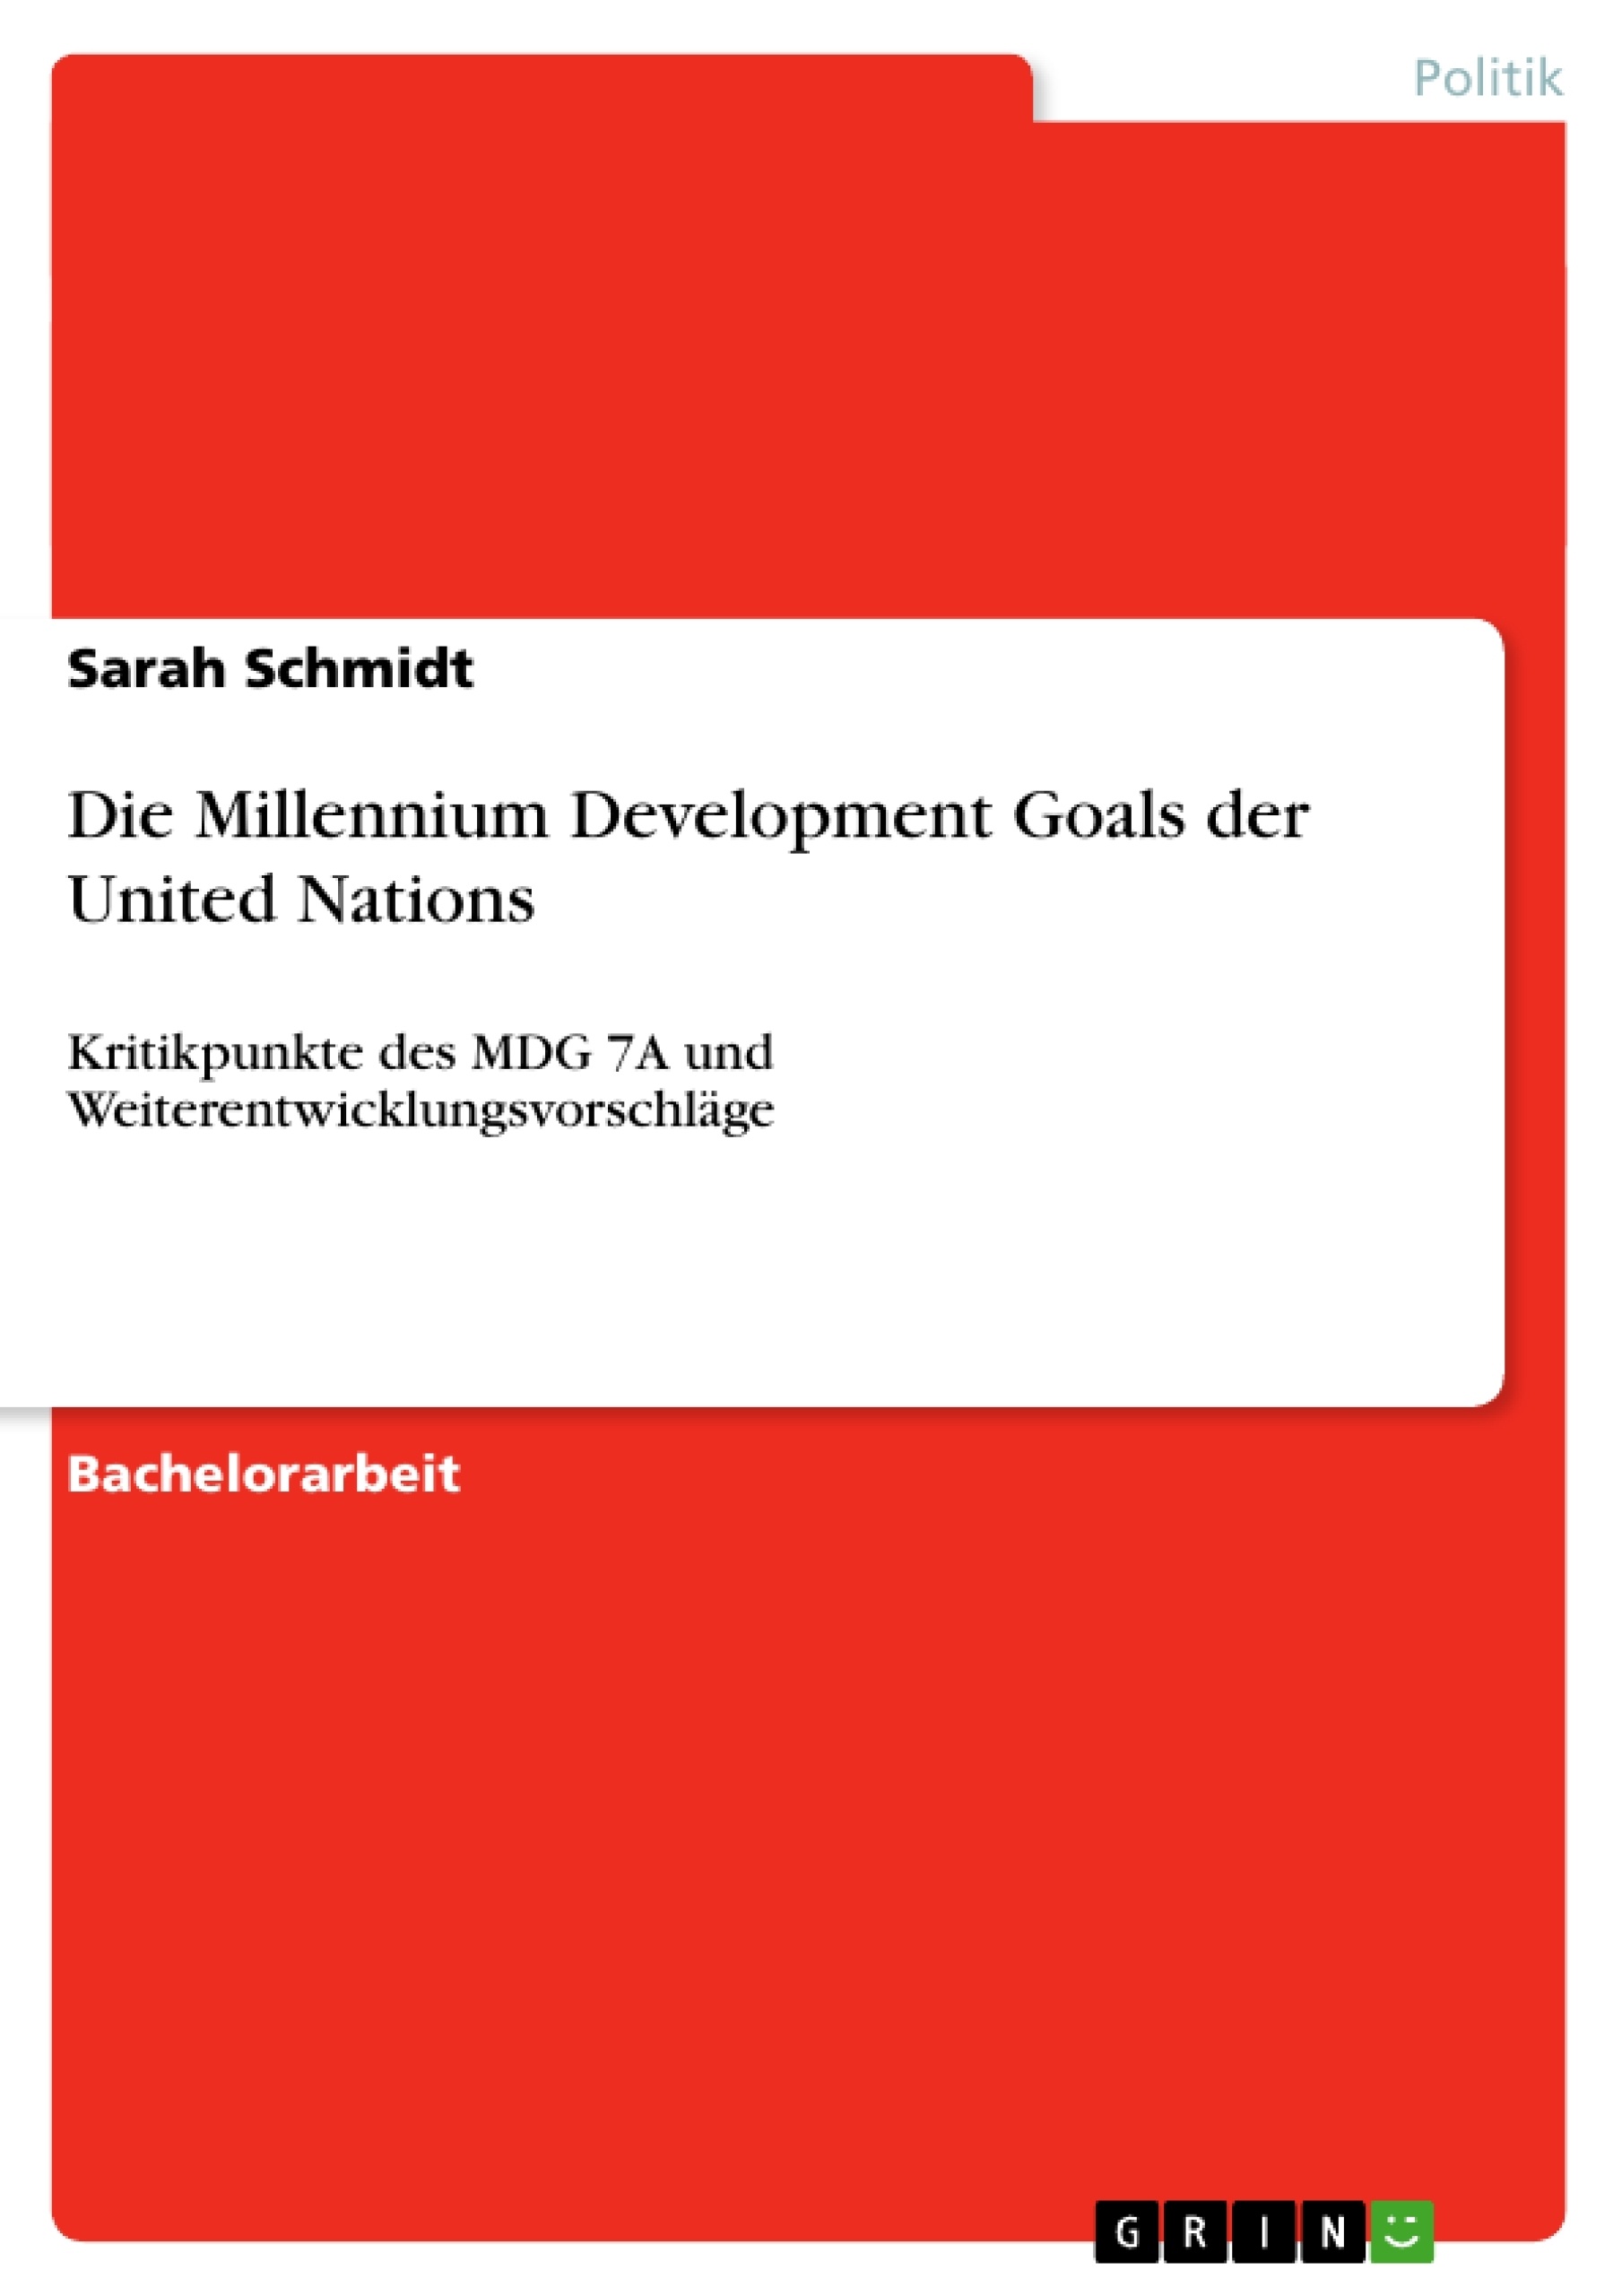 United nations millennium development goal essay